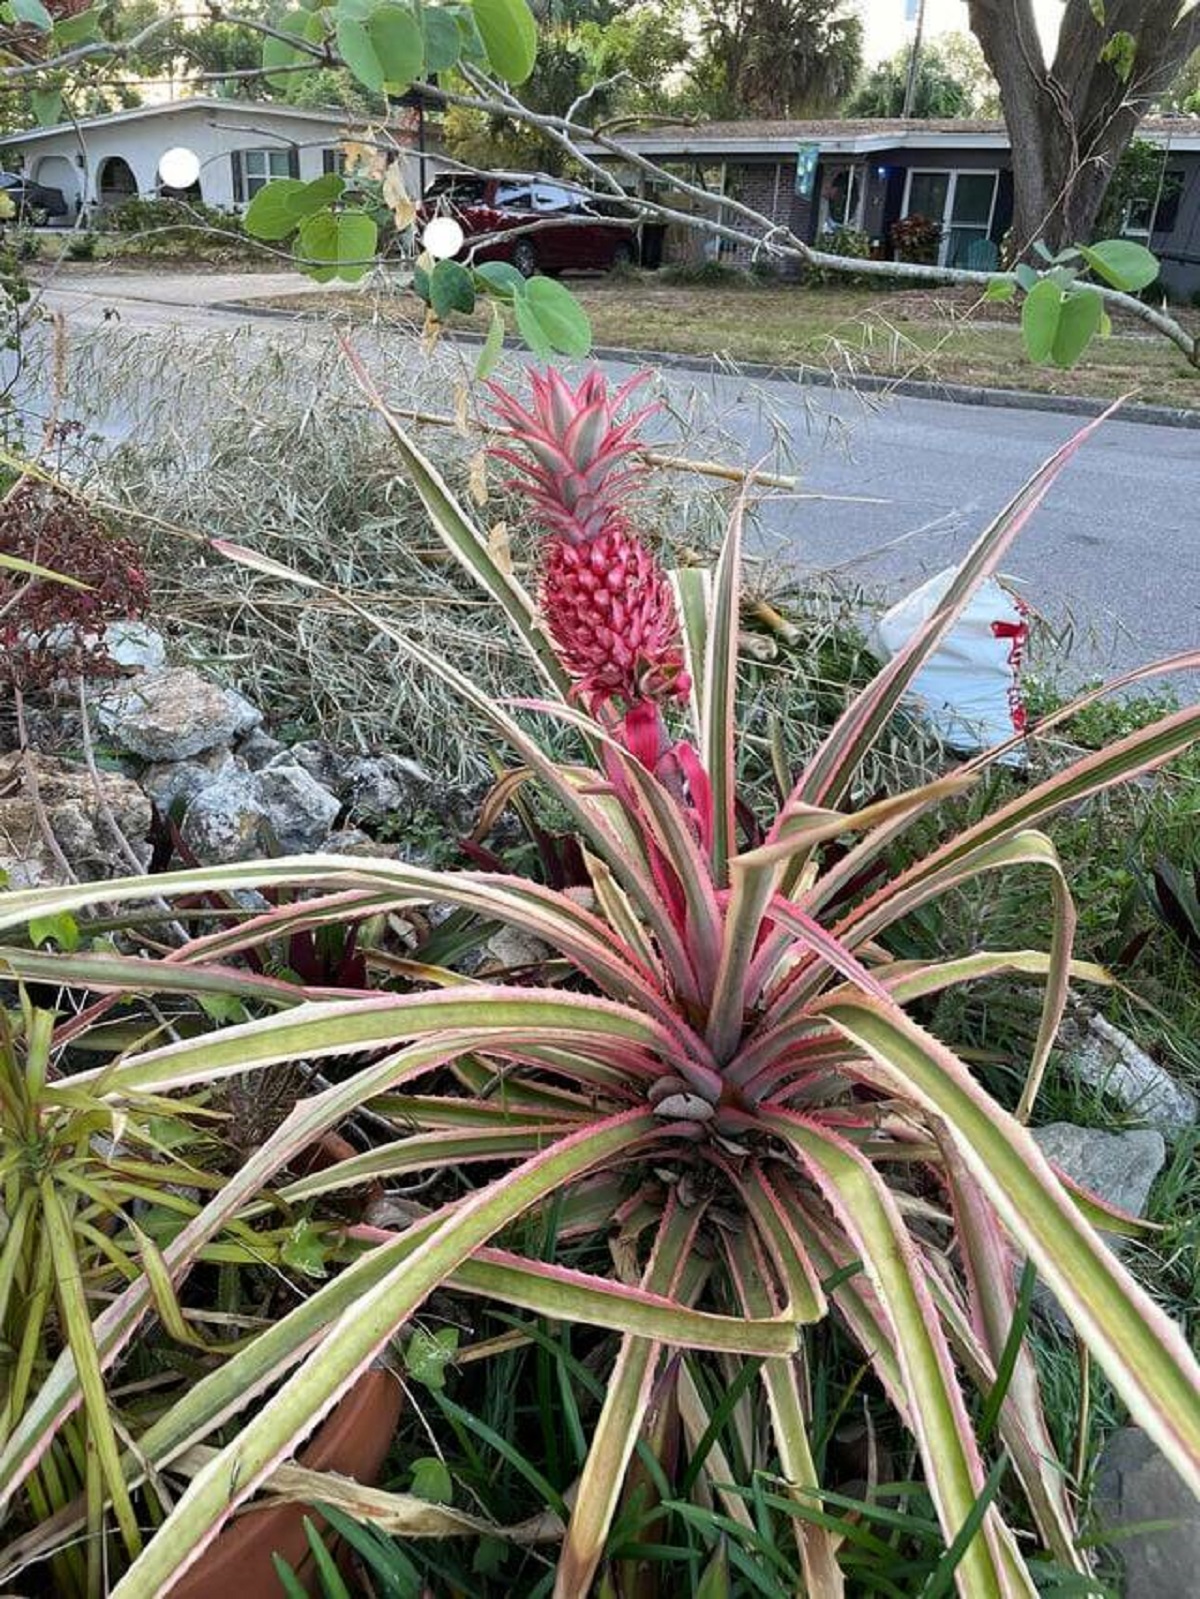 "Pink pineapple growing in my neighborhood"